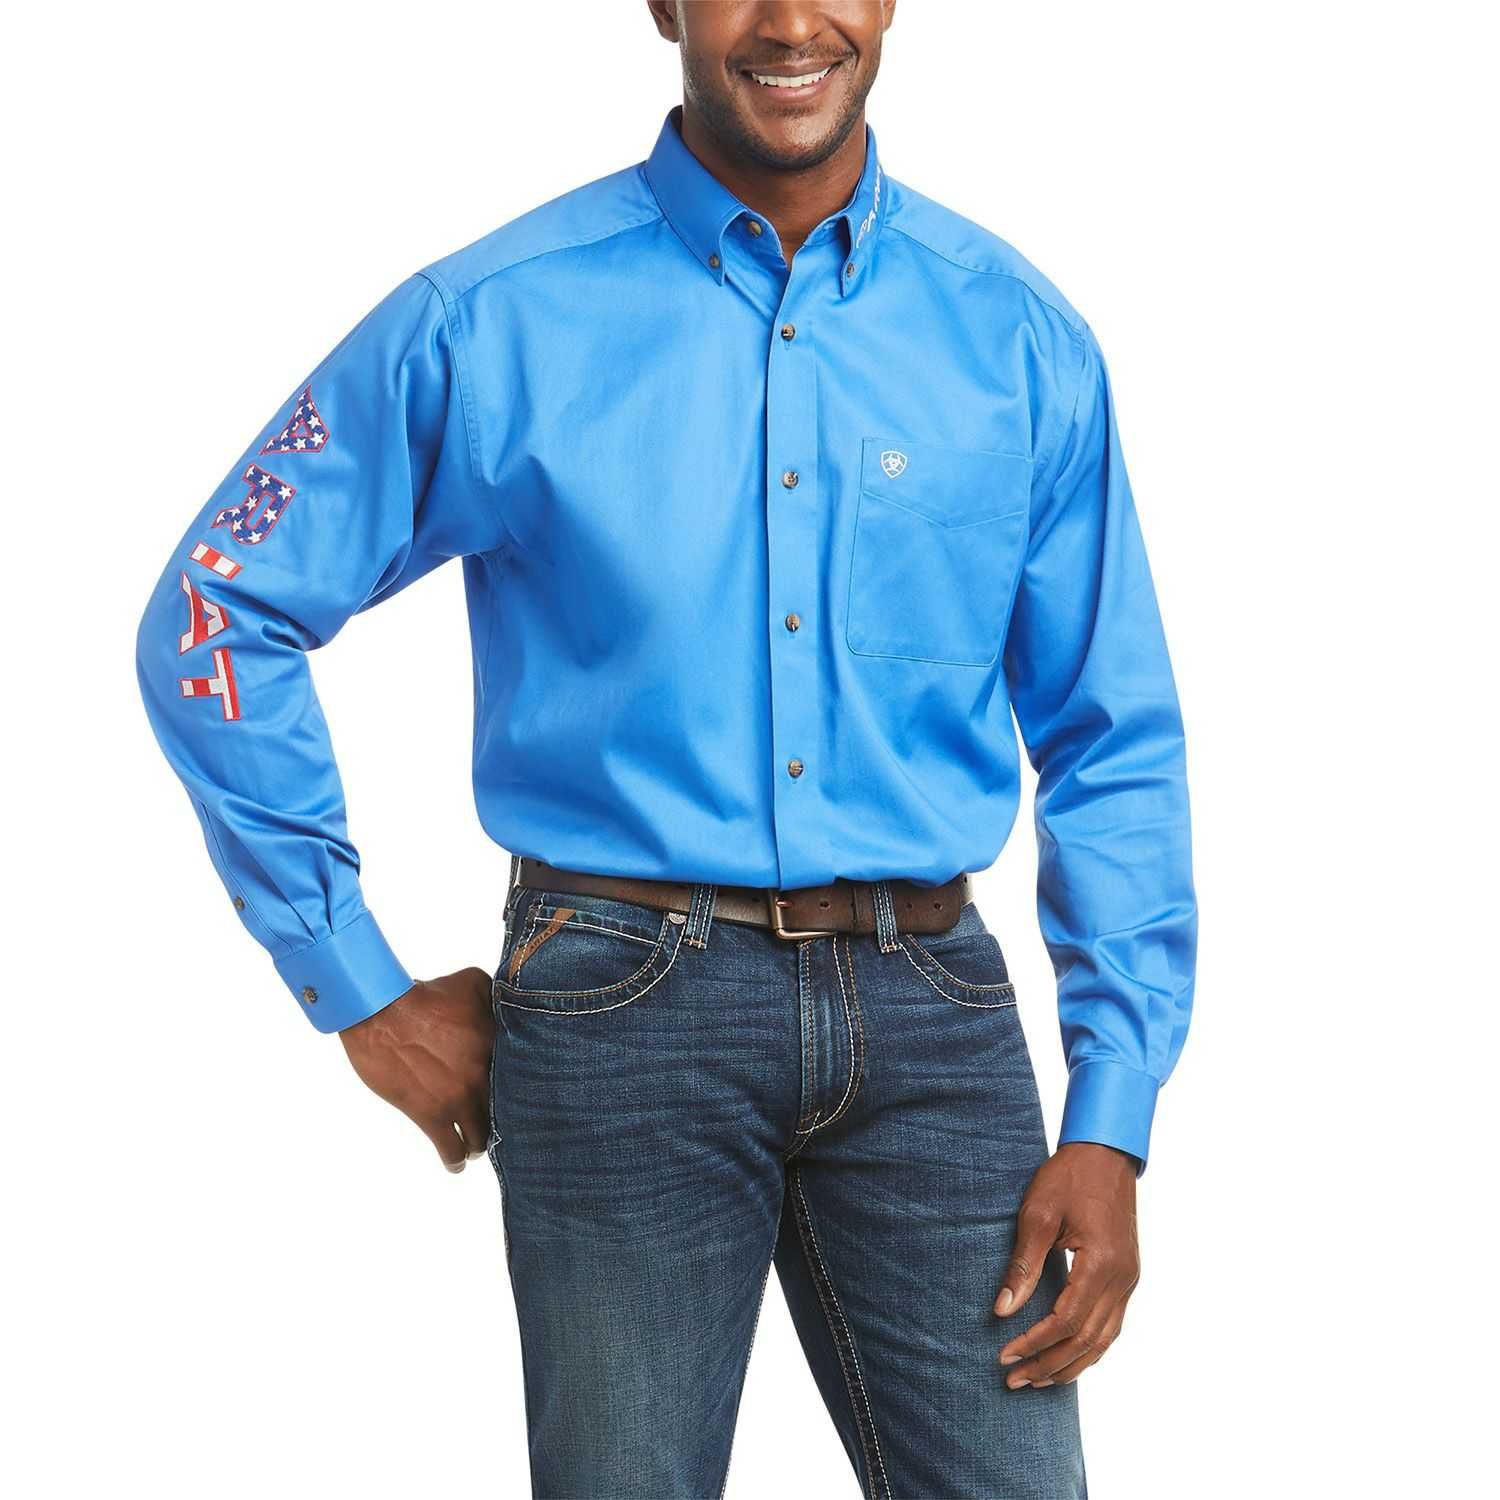 https://www.pfiwestern.com/media/catalog/product/cache/12946f501fb8eea9b0b25f6c3c116ad9/image/19317424a6/ariat-mens-usa-blue-team-logo-long-sleeve-shirt.jpg